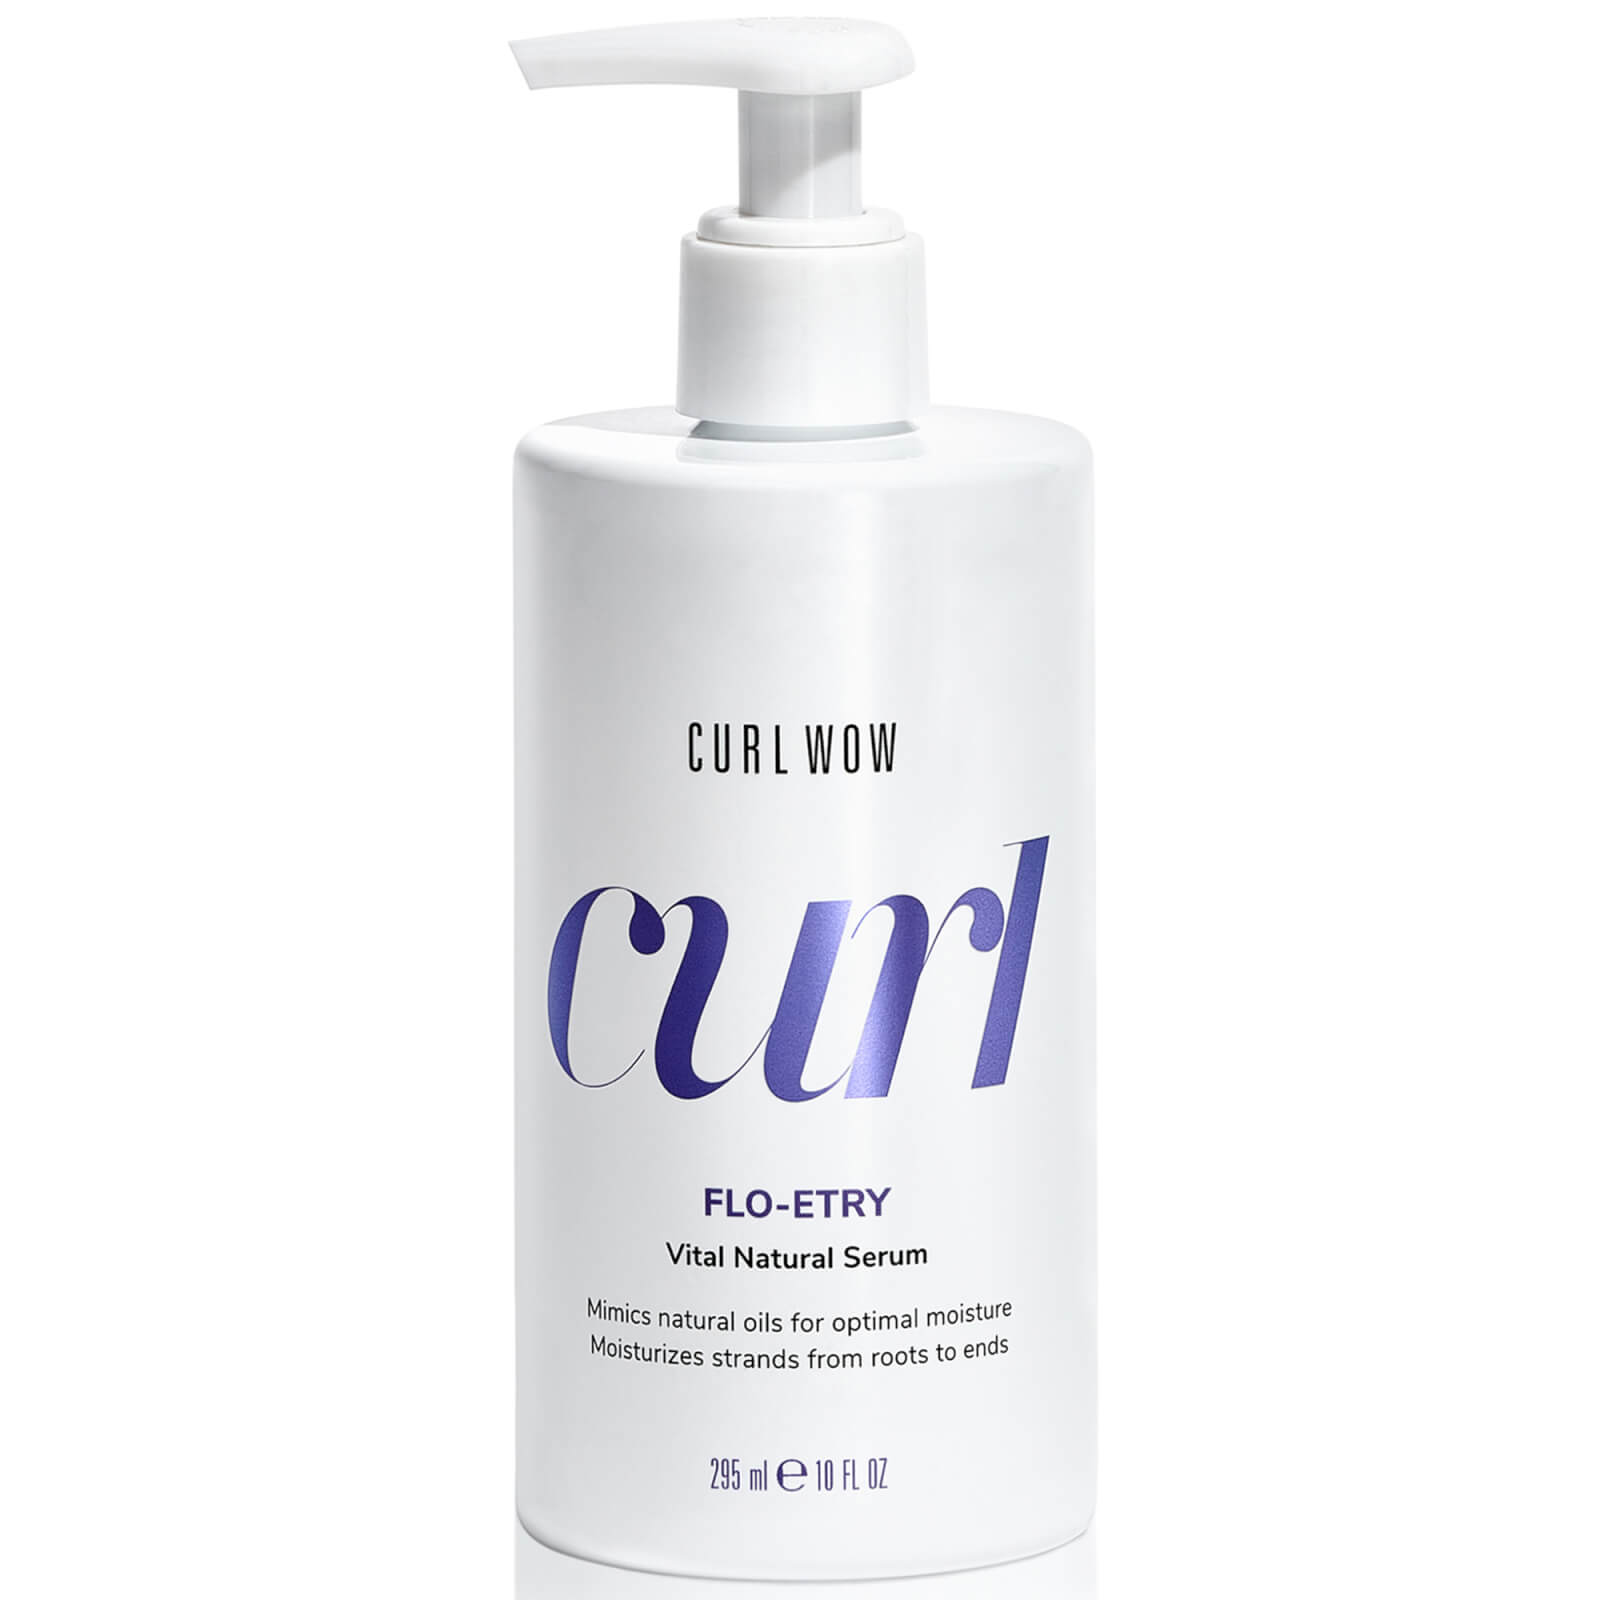 Color Wow Curl Wow Flo-etry Vital Natural Serum 10 oz / 295 ml 10 oz / 295 ml